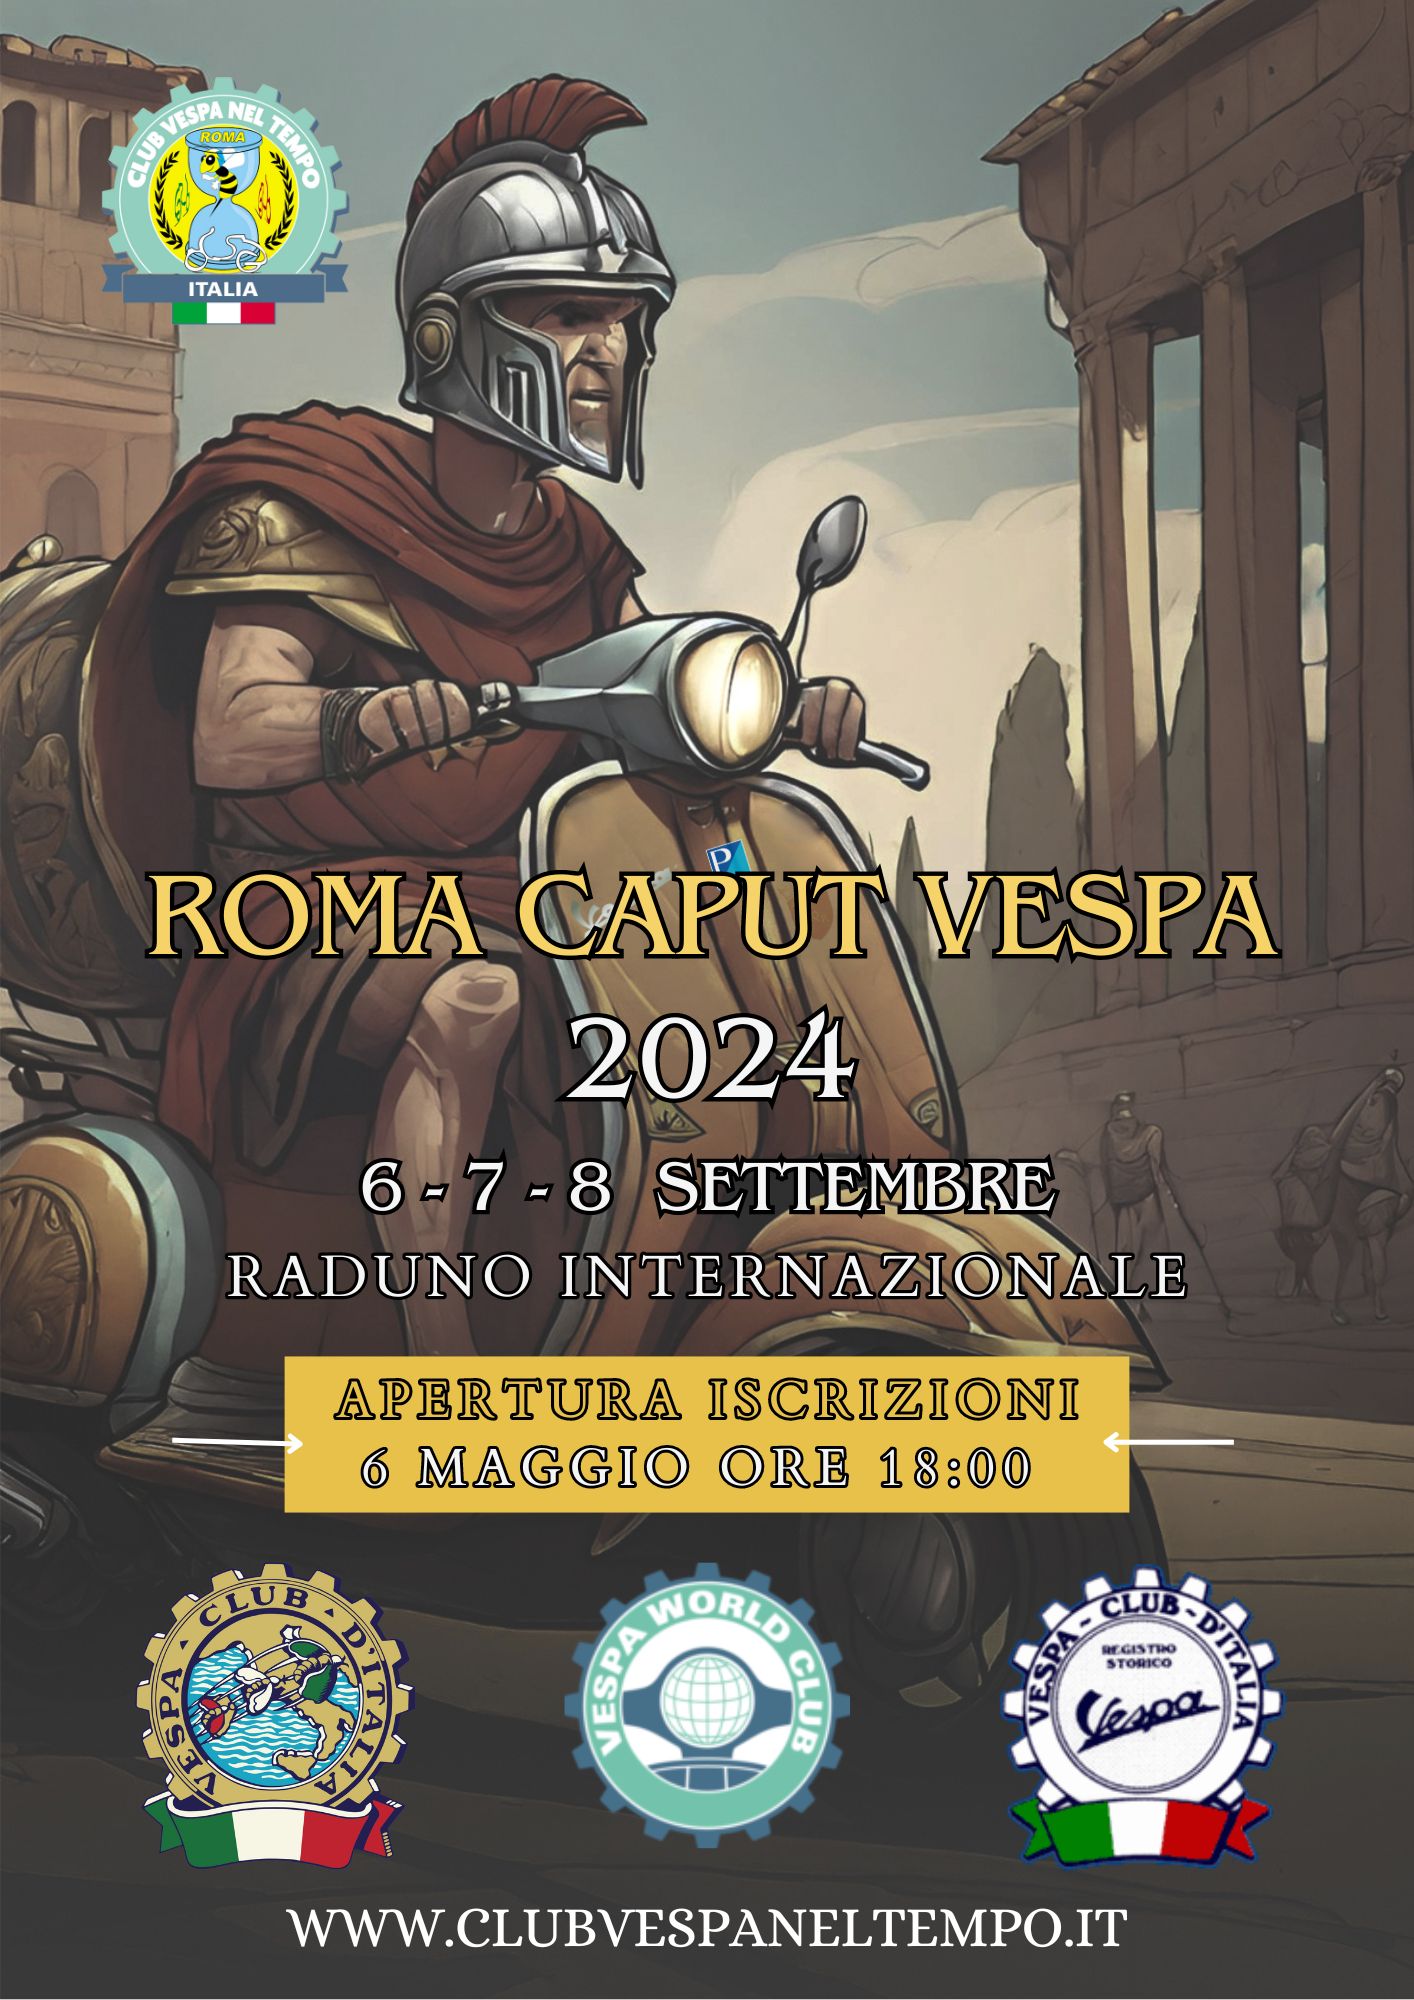 COMING SOON ROMA CAPUT VESPA 2024 1